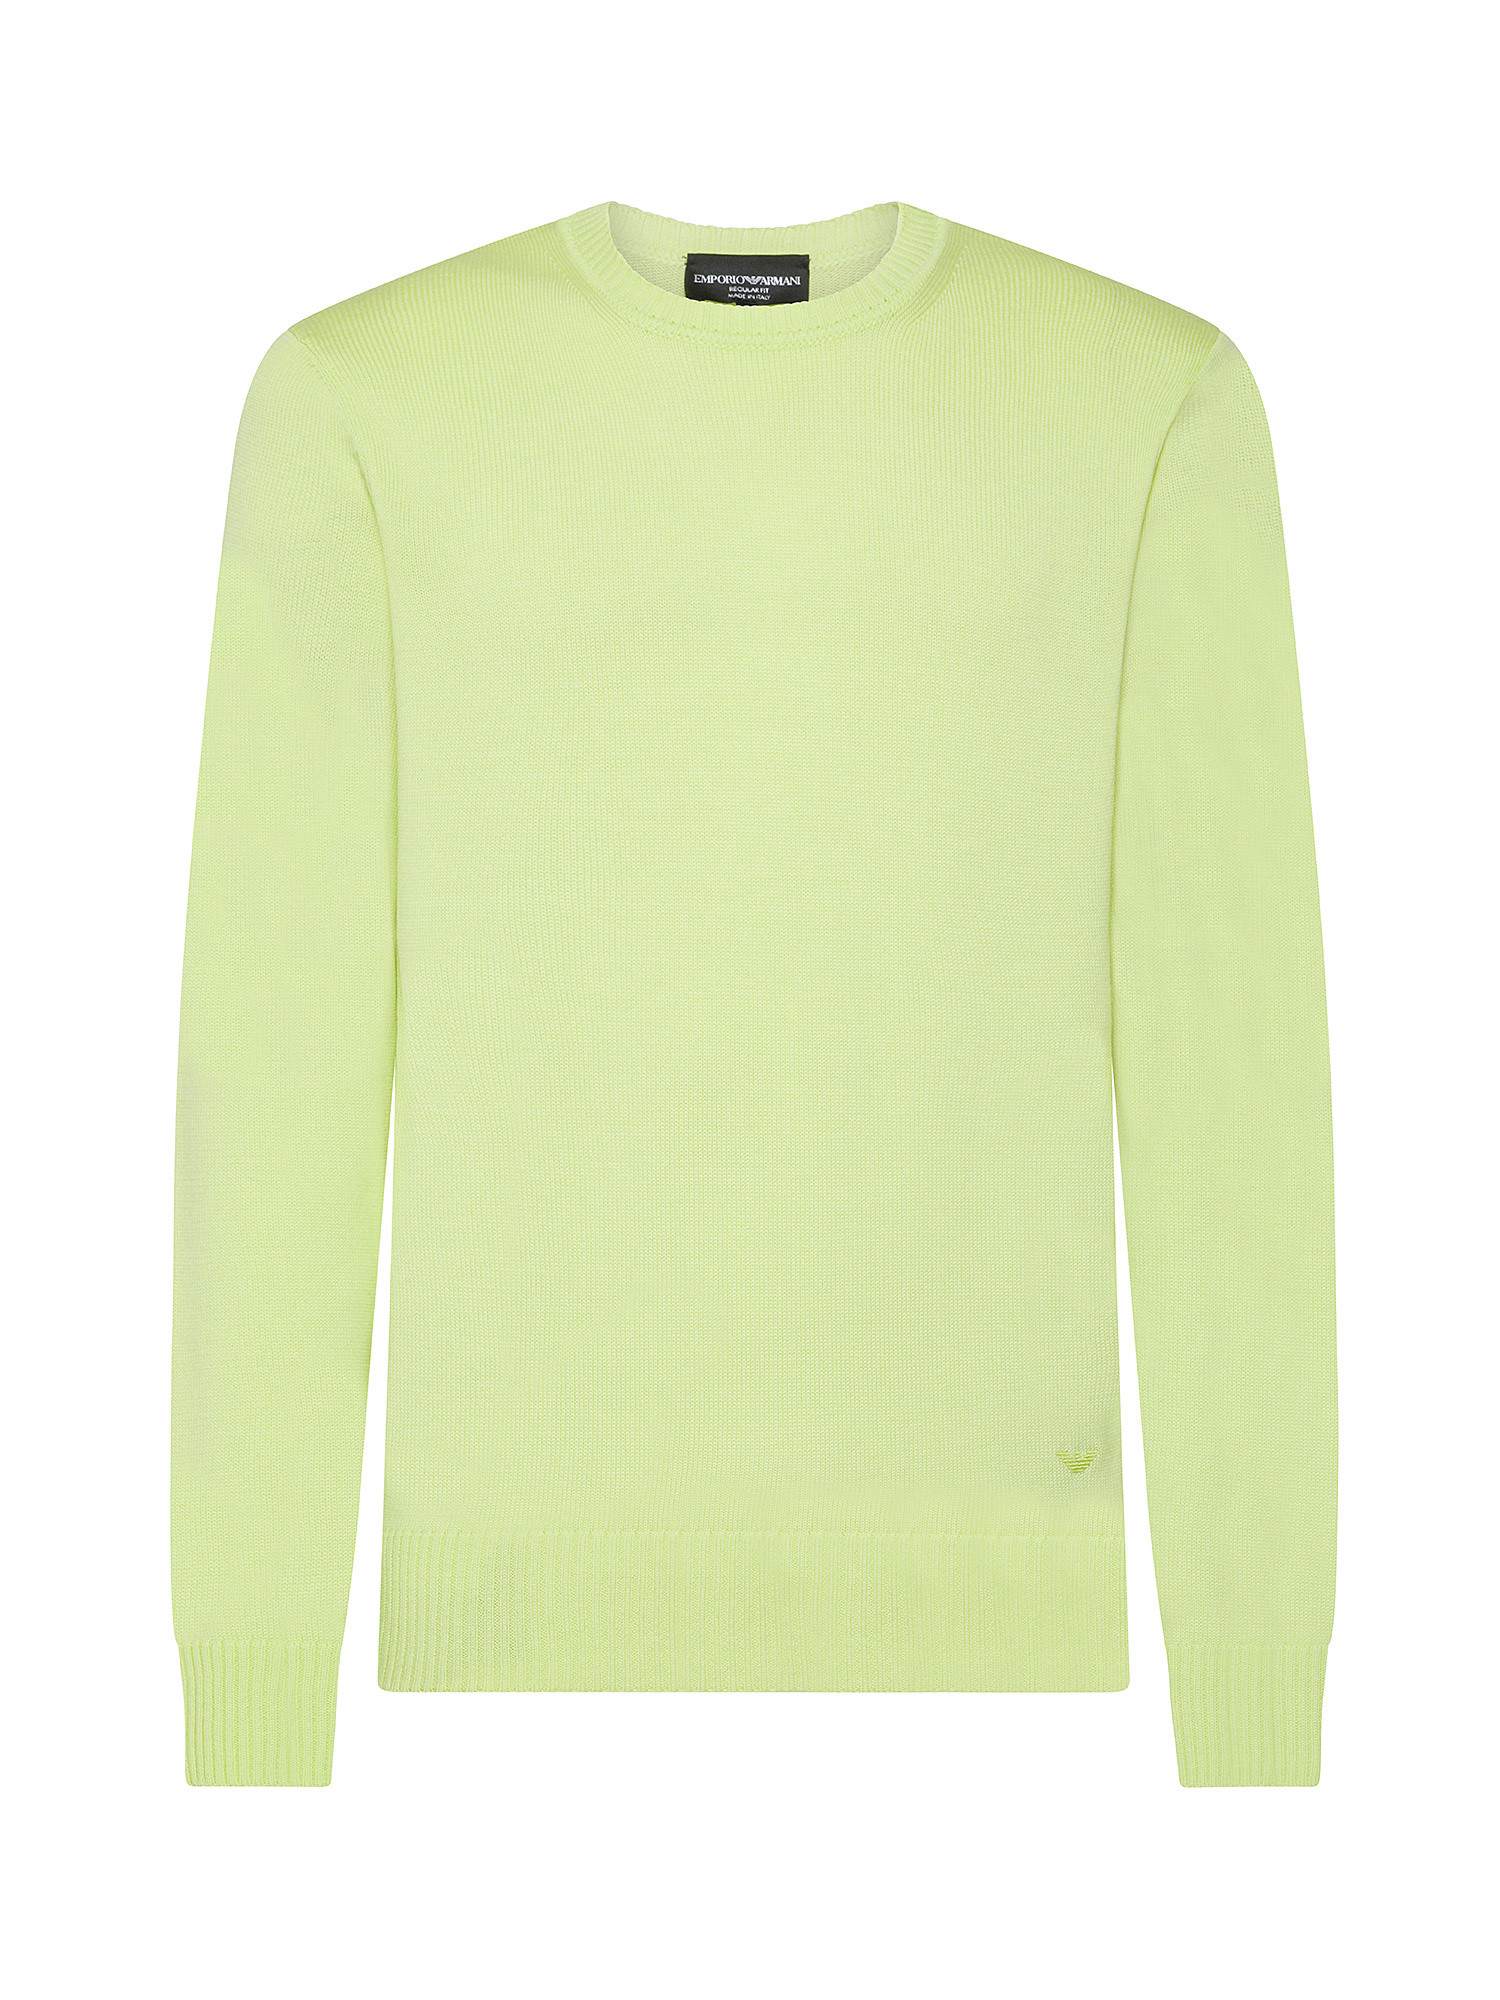 Emporio Armani - Regular fit sweater in virgin wool, Yellow, large image number 0